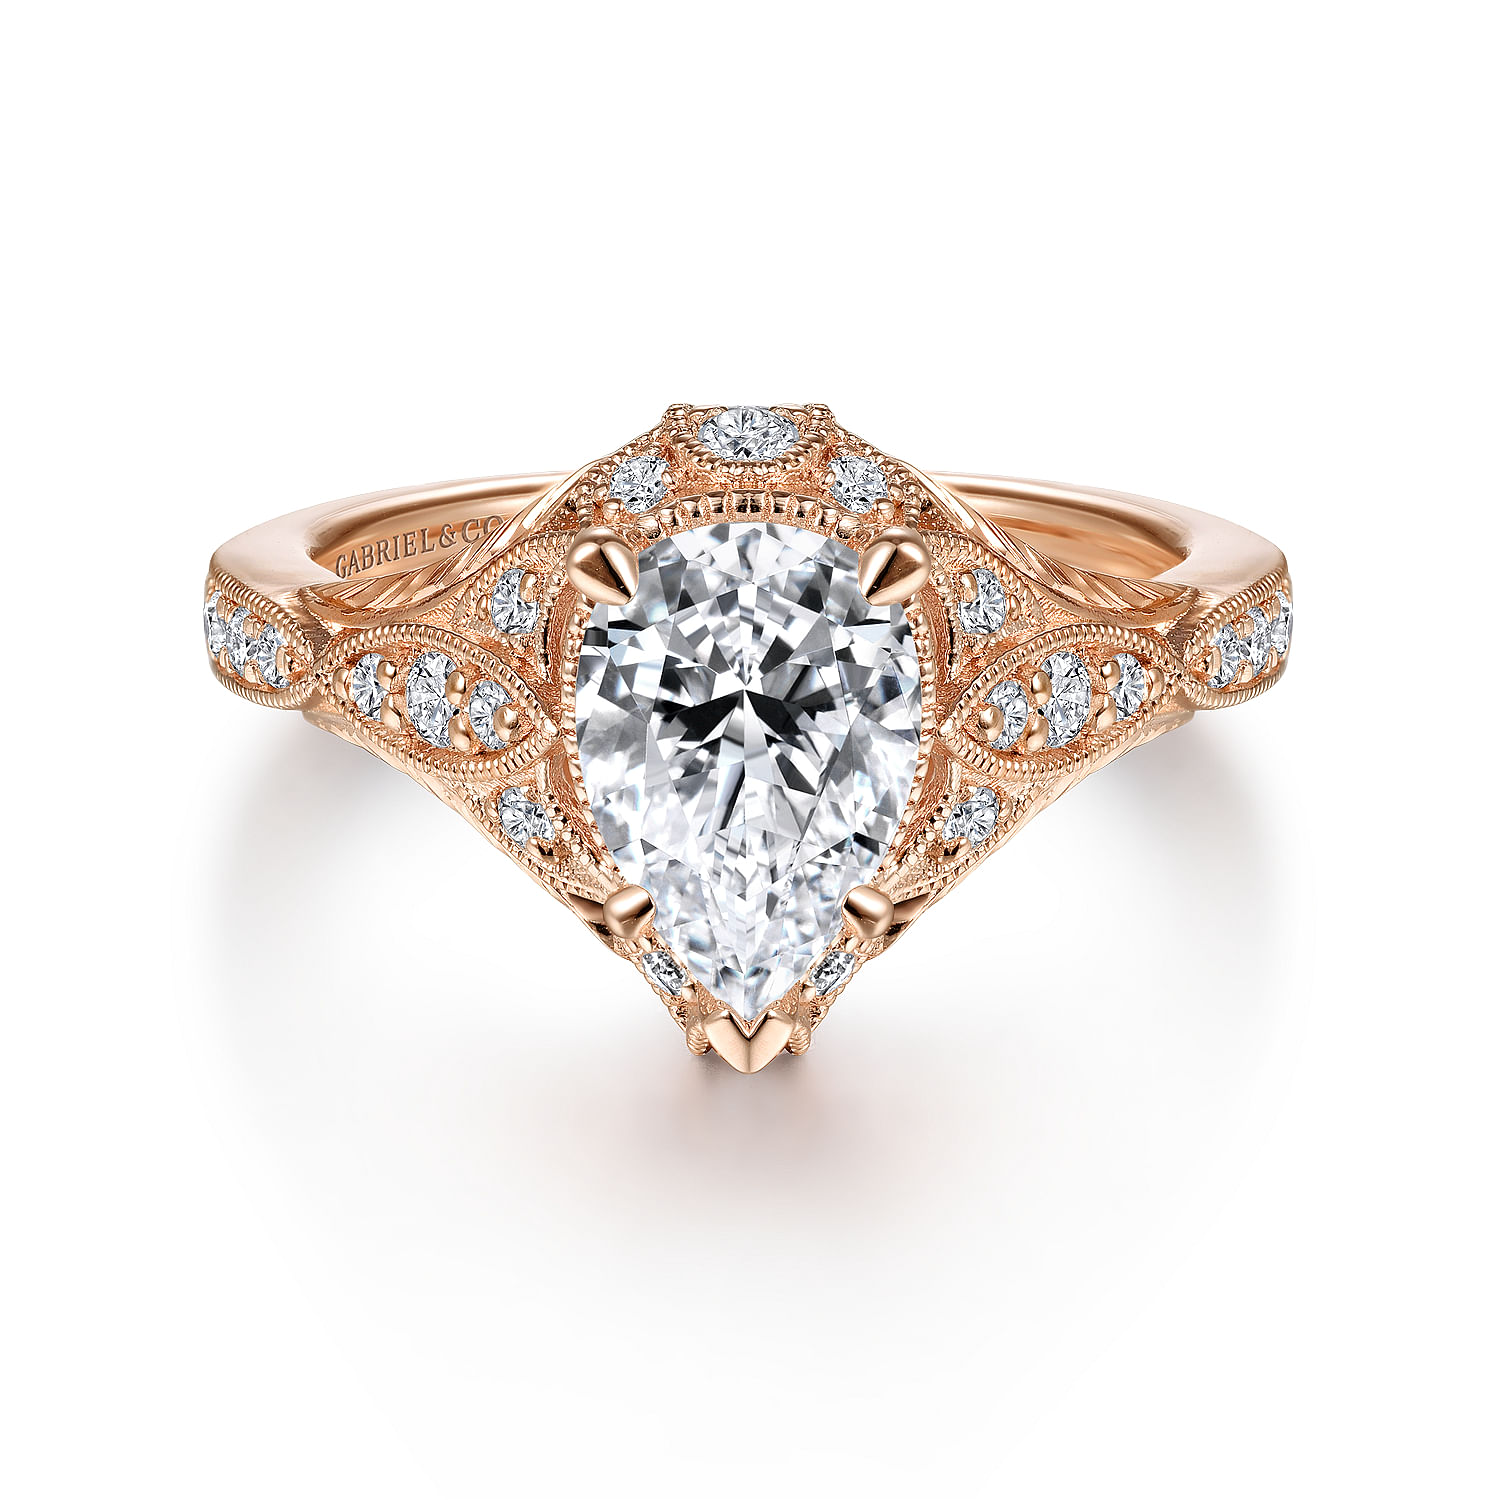 Gabriel - Unique 14K Rose Gold Vintage Inspired Pear Shape Diamond Halo Engagement Ring